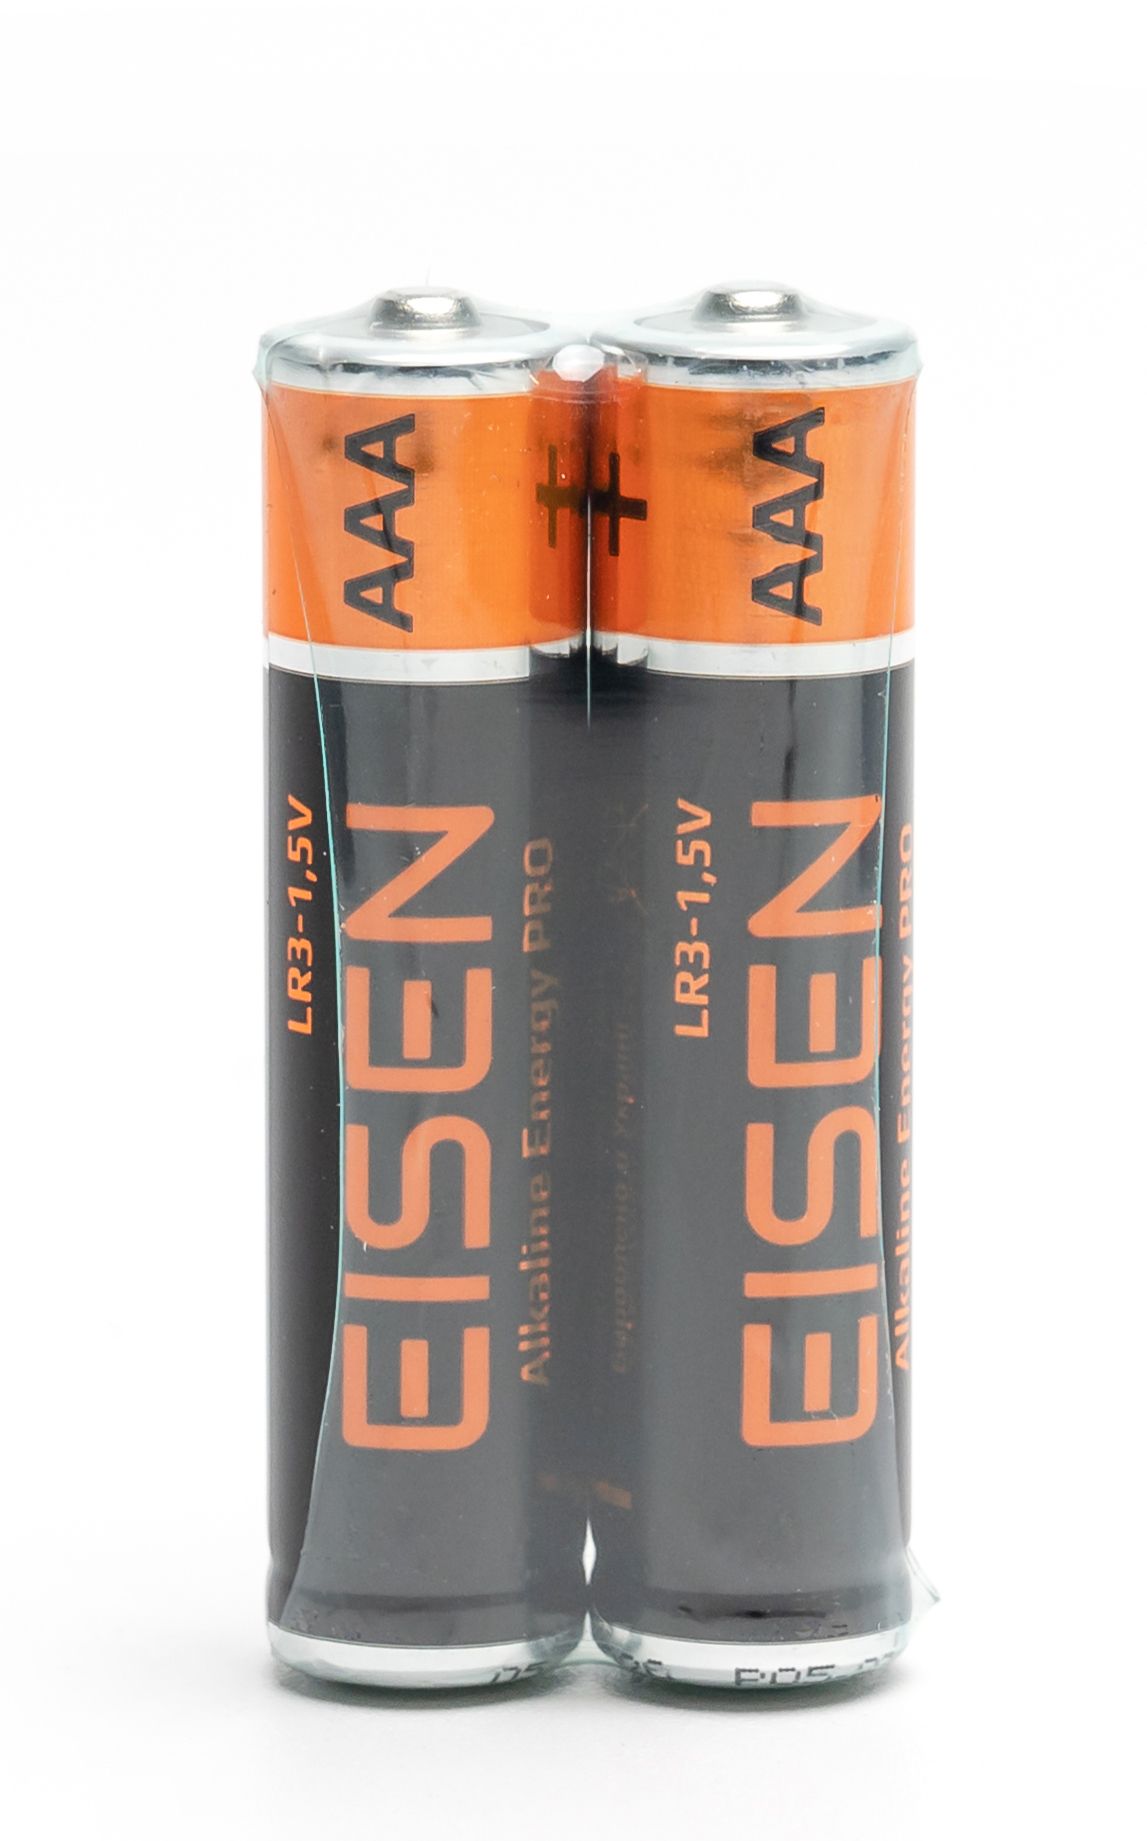 Батарейка Eisen Energy Alkaline PRO LR03 (AAA) спайка 2шт. в Херсоне